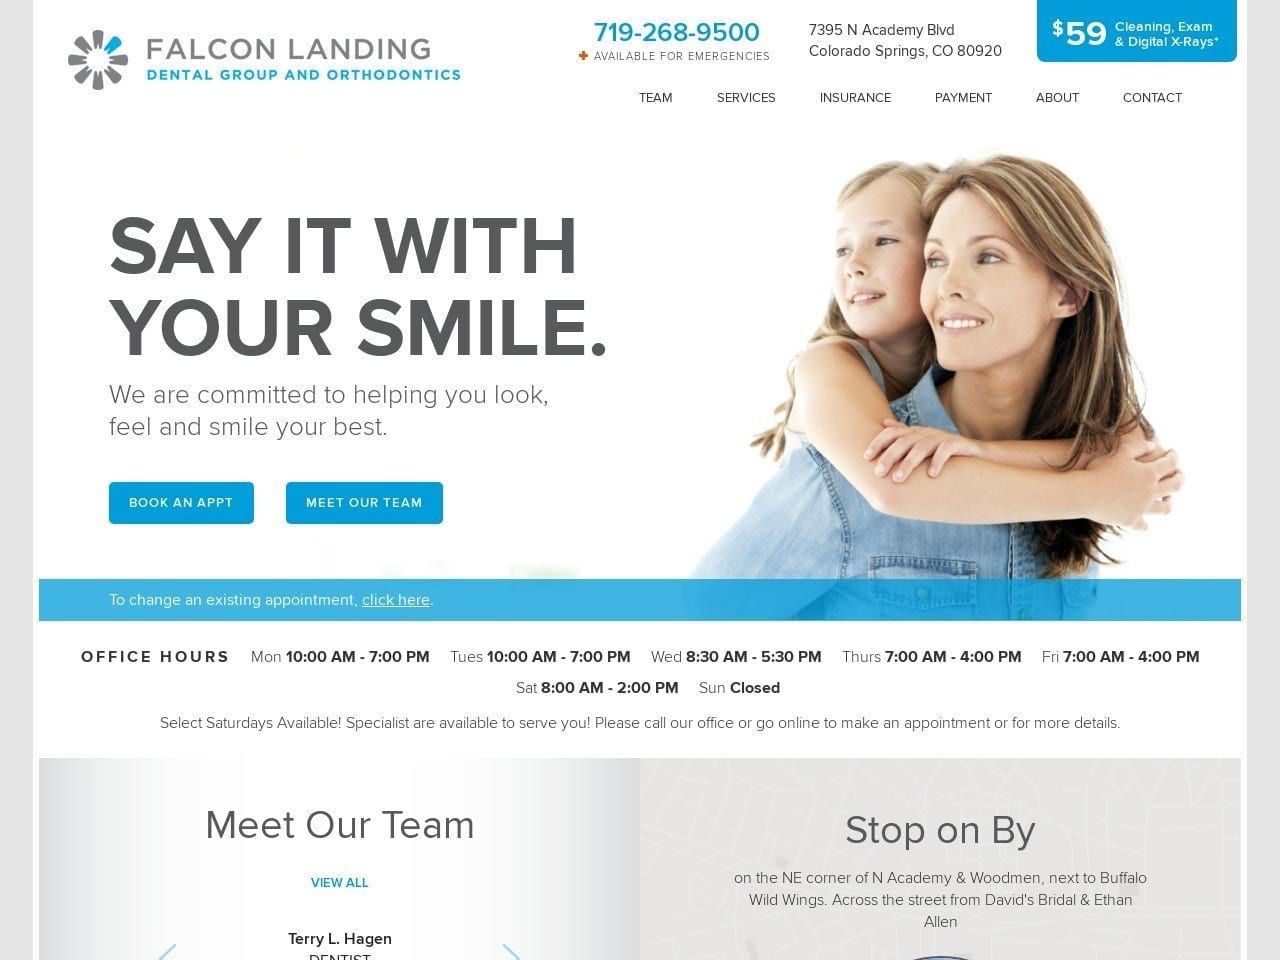 Falcon Landing Dental Group and Orthodontics Website Screenshot from falconlandingdentalgroup.com